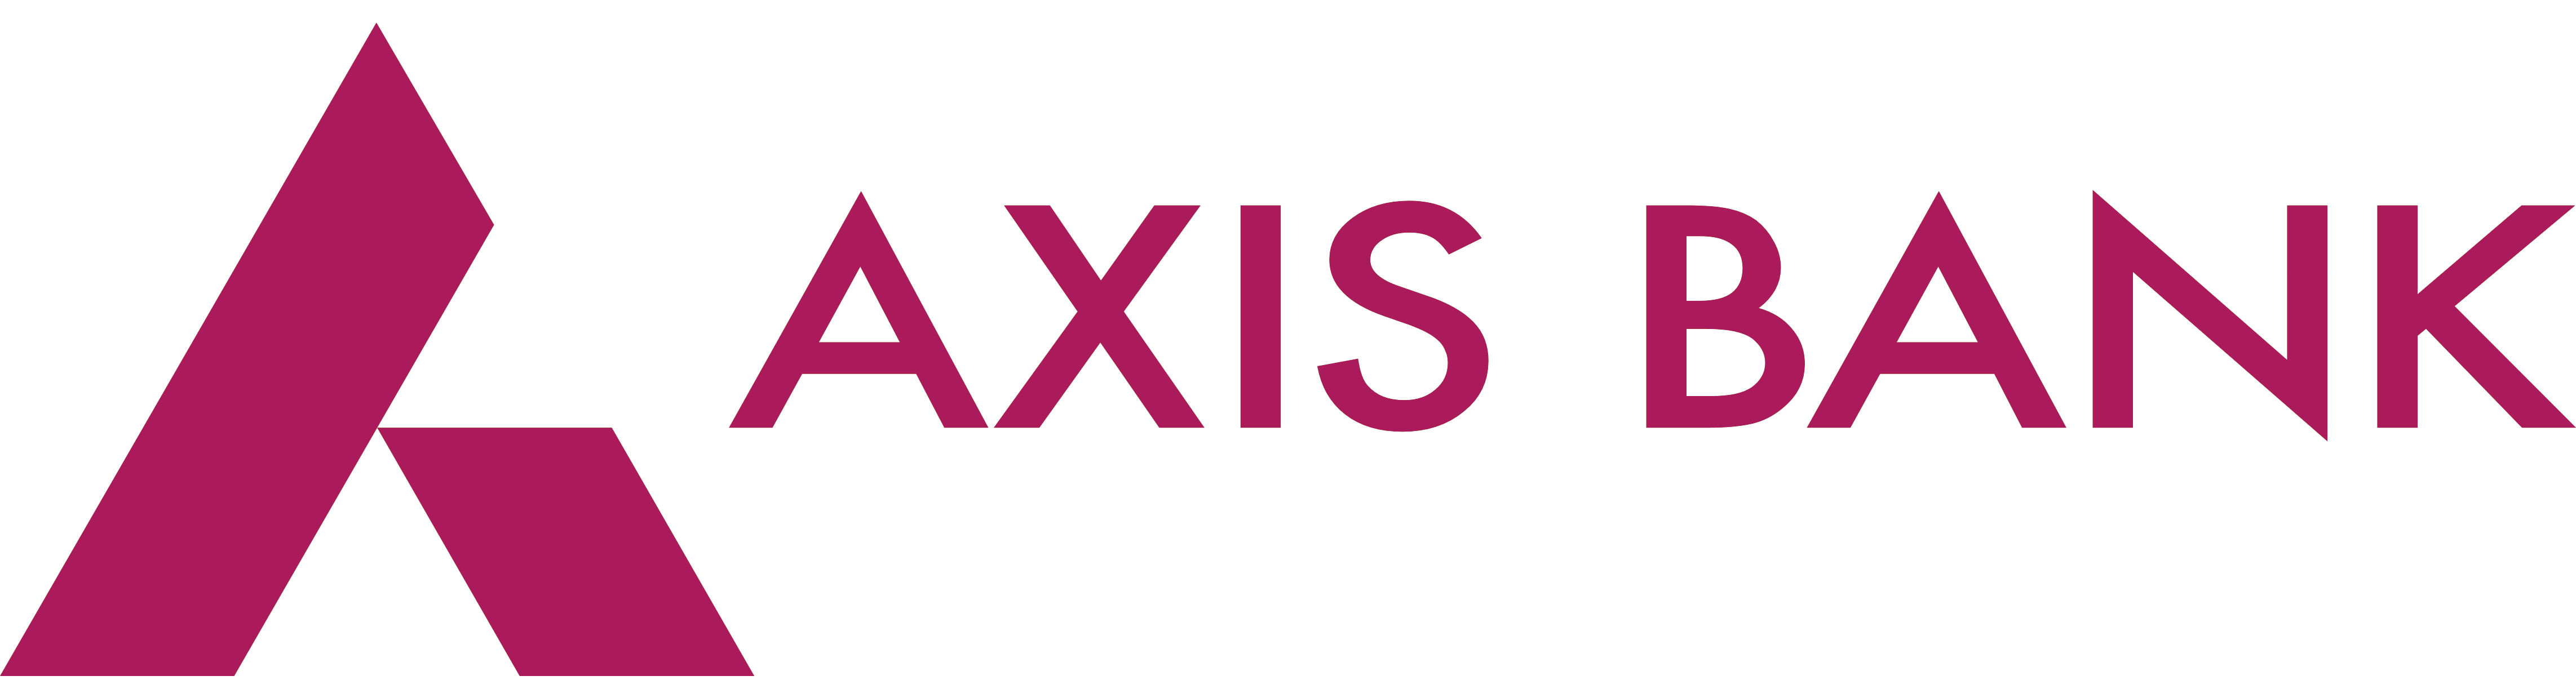 Axis Bank Logos Download